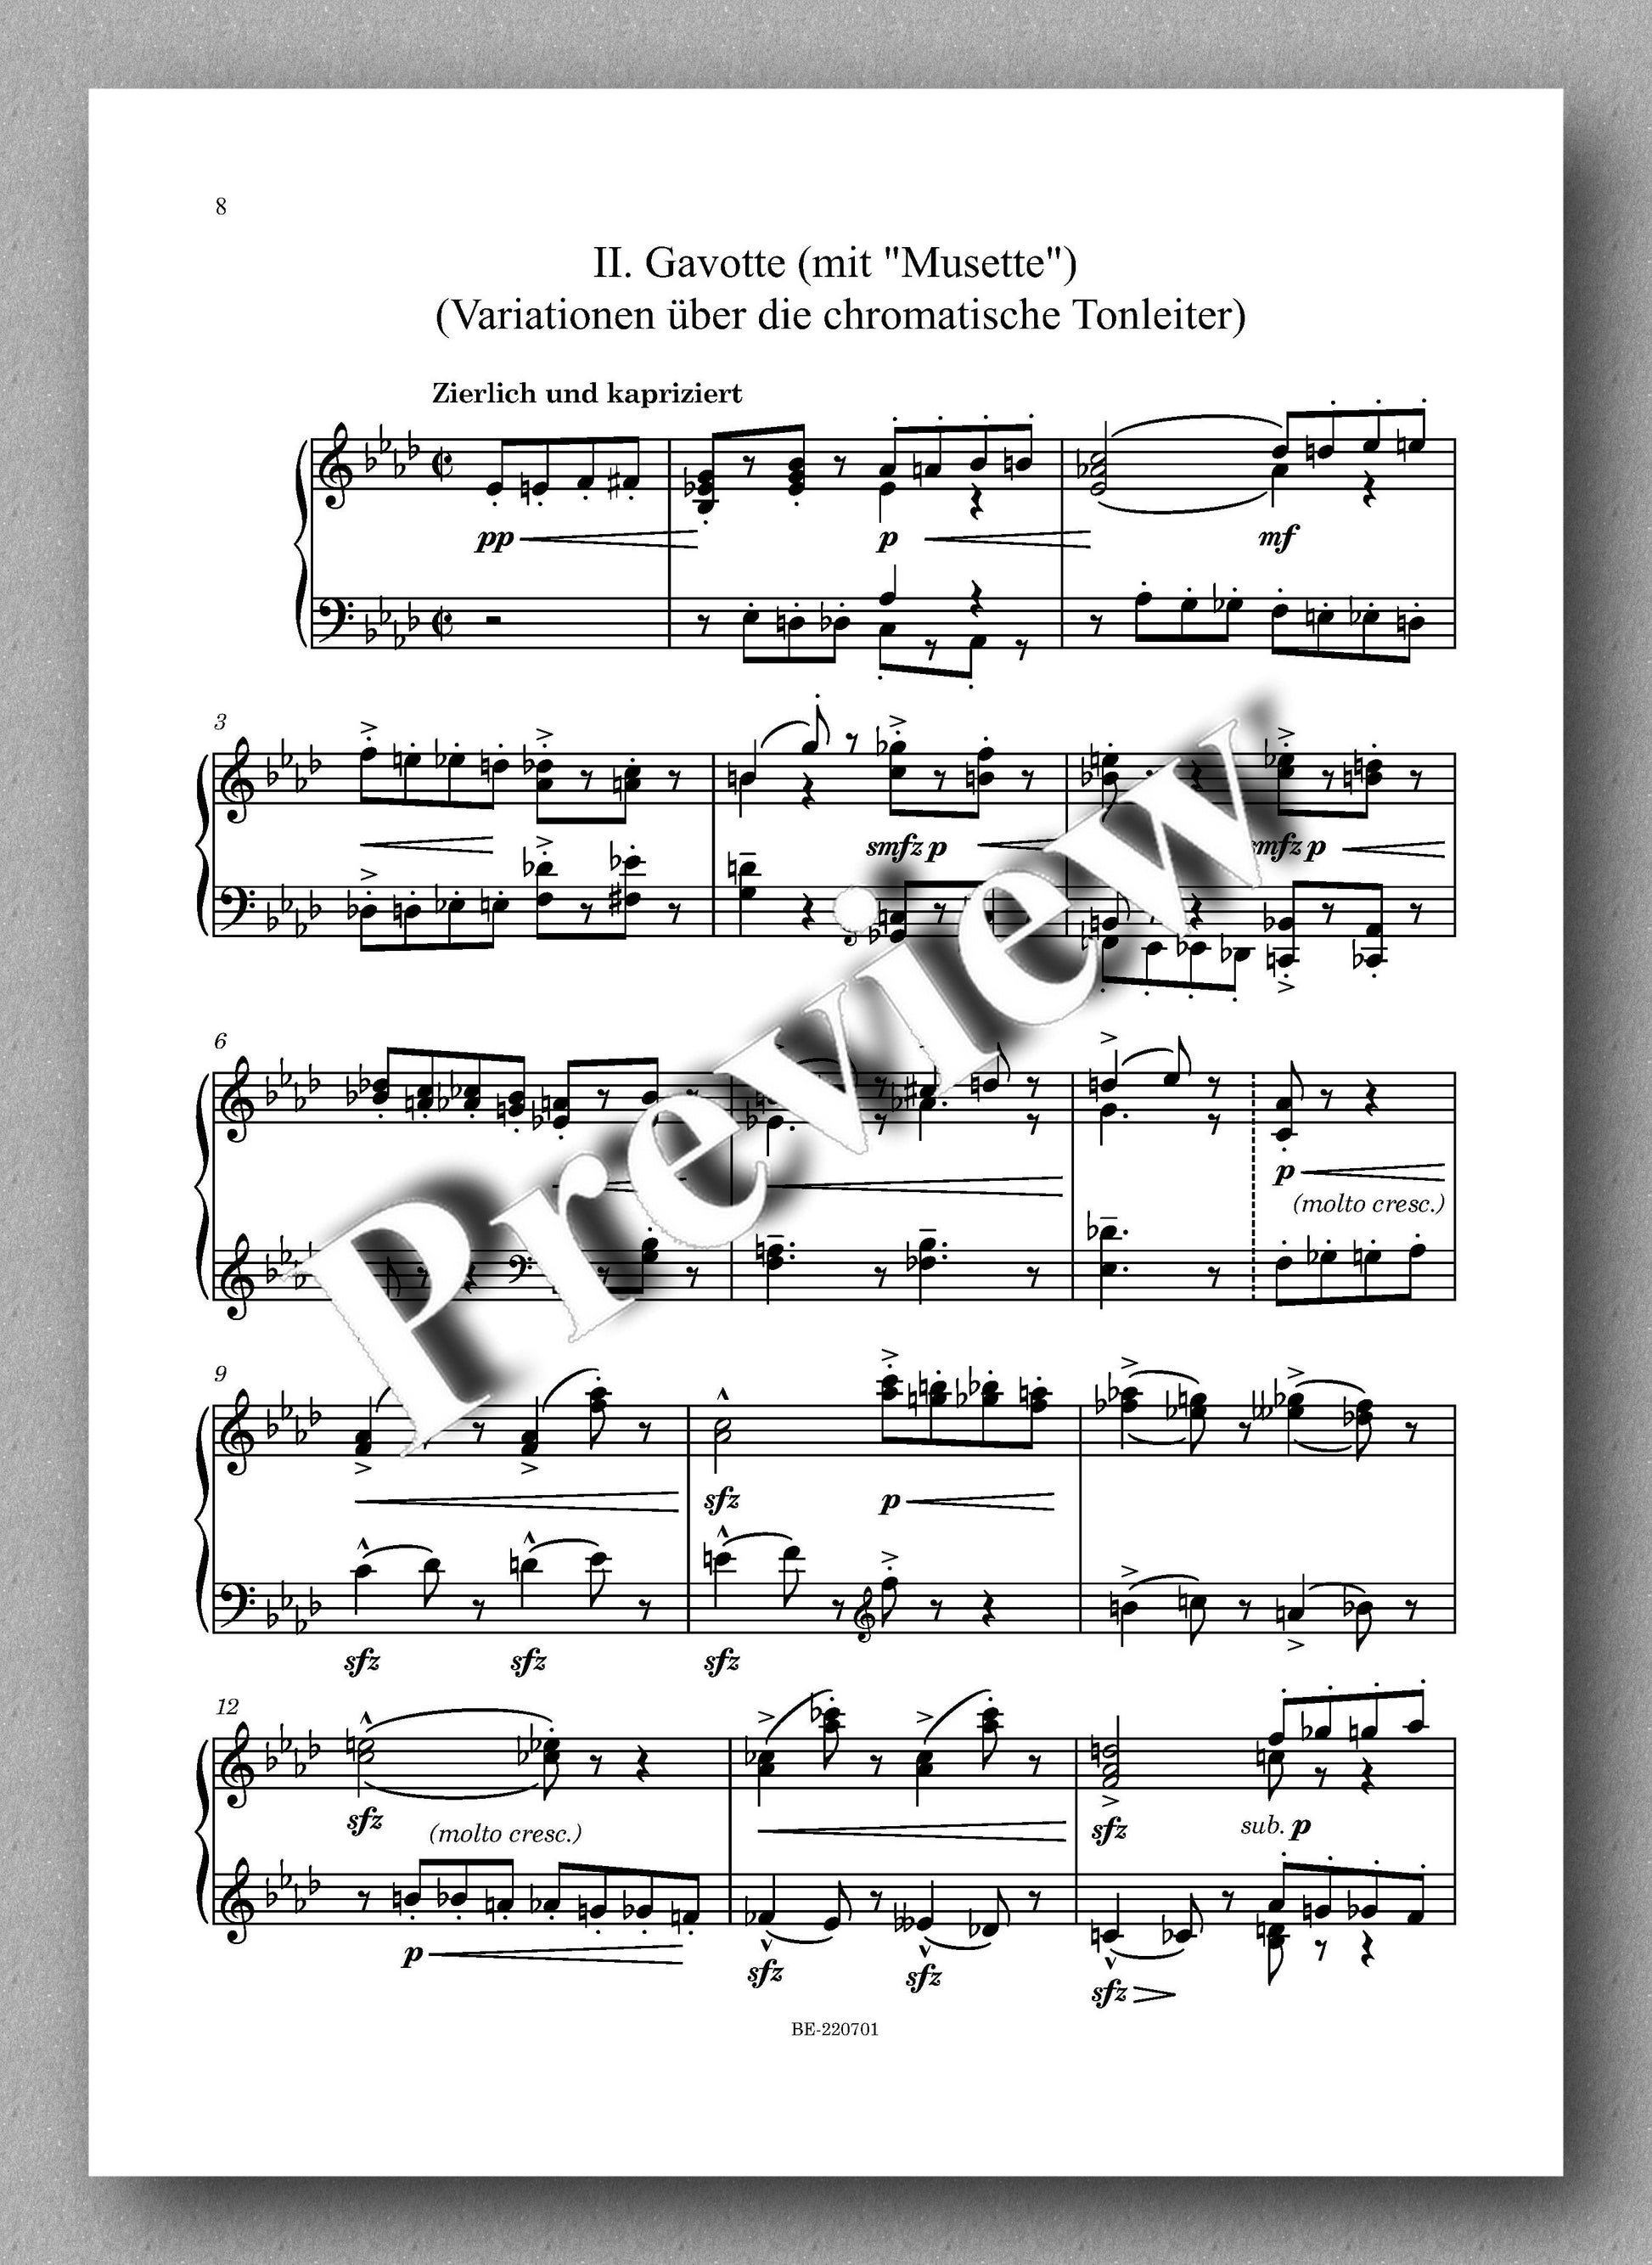 Rebay, Klavier No. 18, Tanzende Tonleitern - music score 2